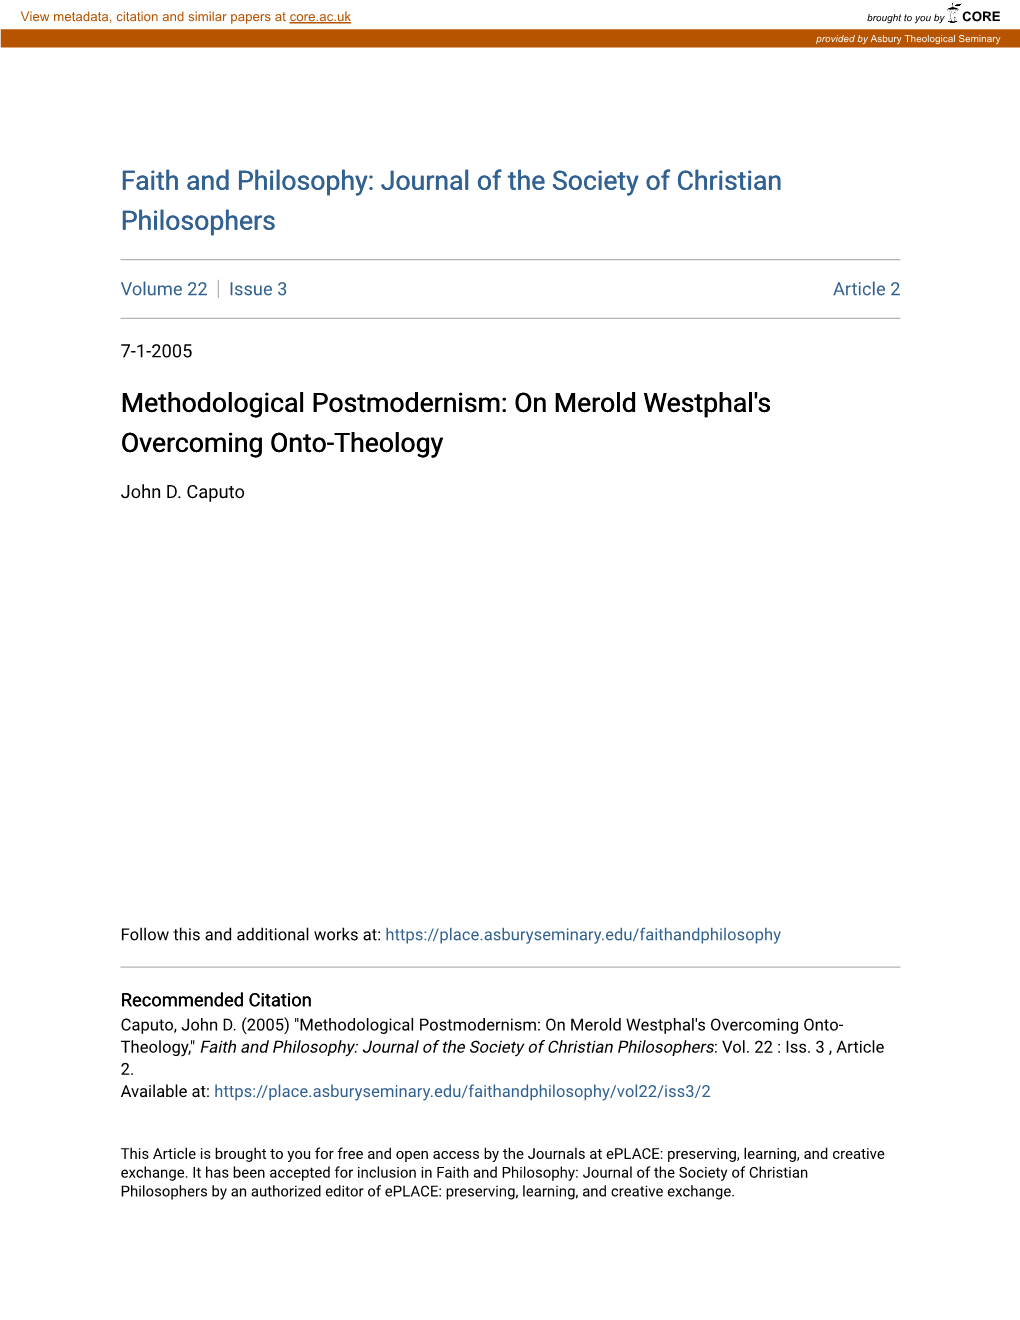 Methodological Postmodernism: on Merold Westphal's Overcoming Onto-Theology